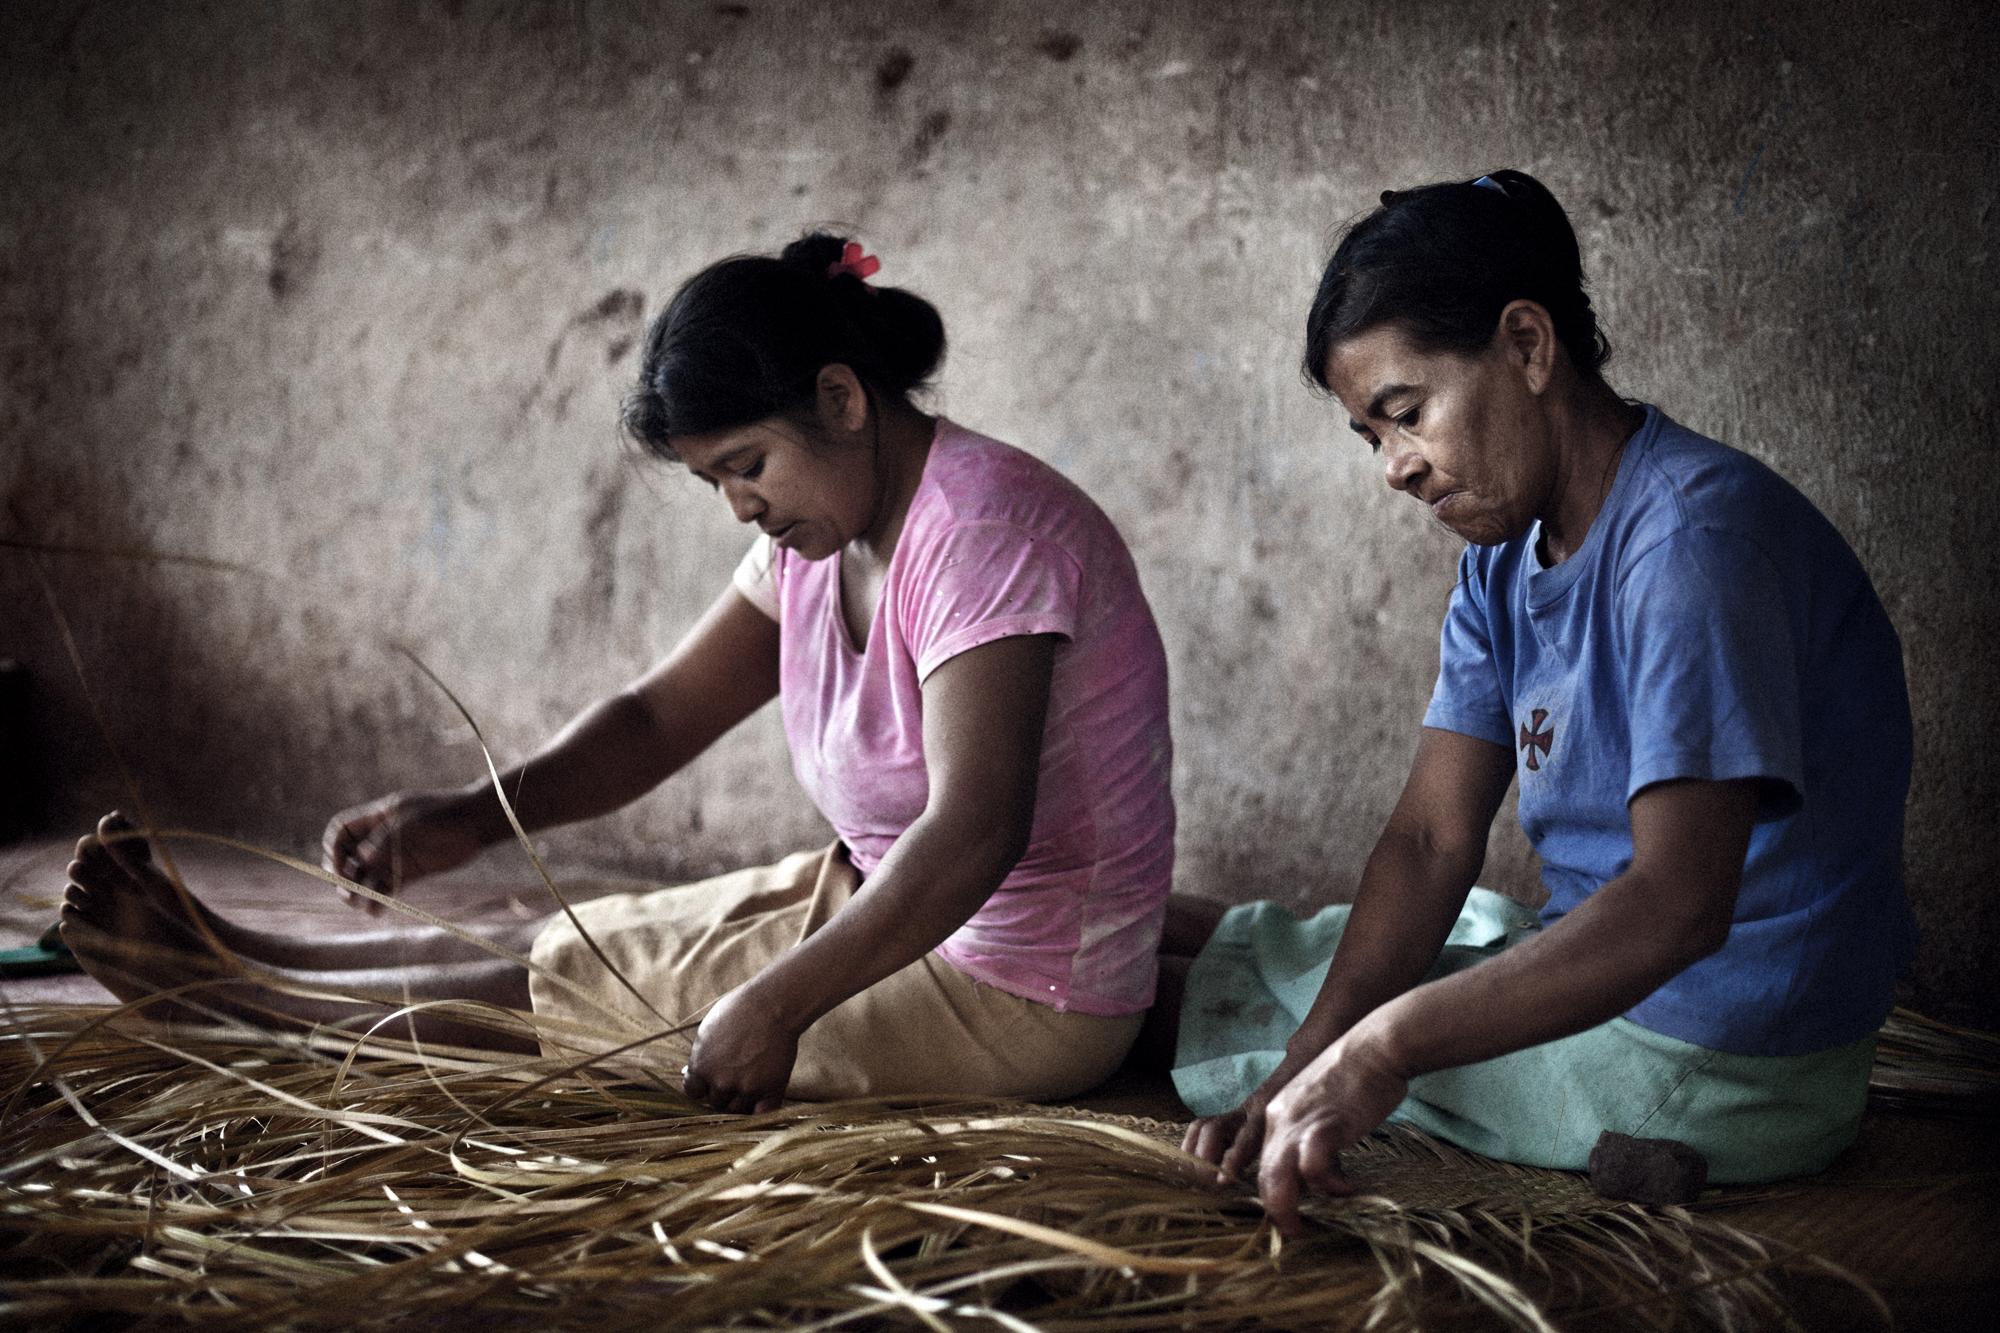 Microcredit / Central America - Somoto, Nicaragua.
October 2010.
Sebastiana Lopez, 45...